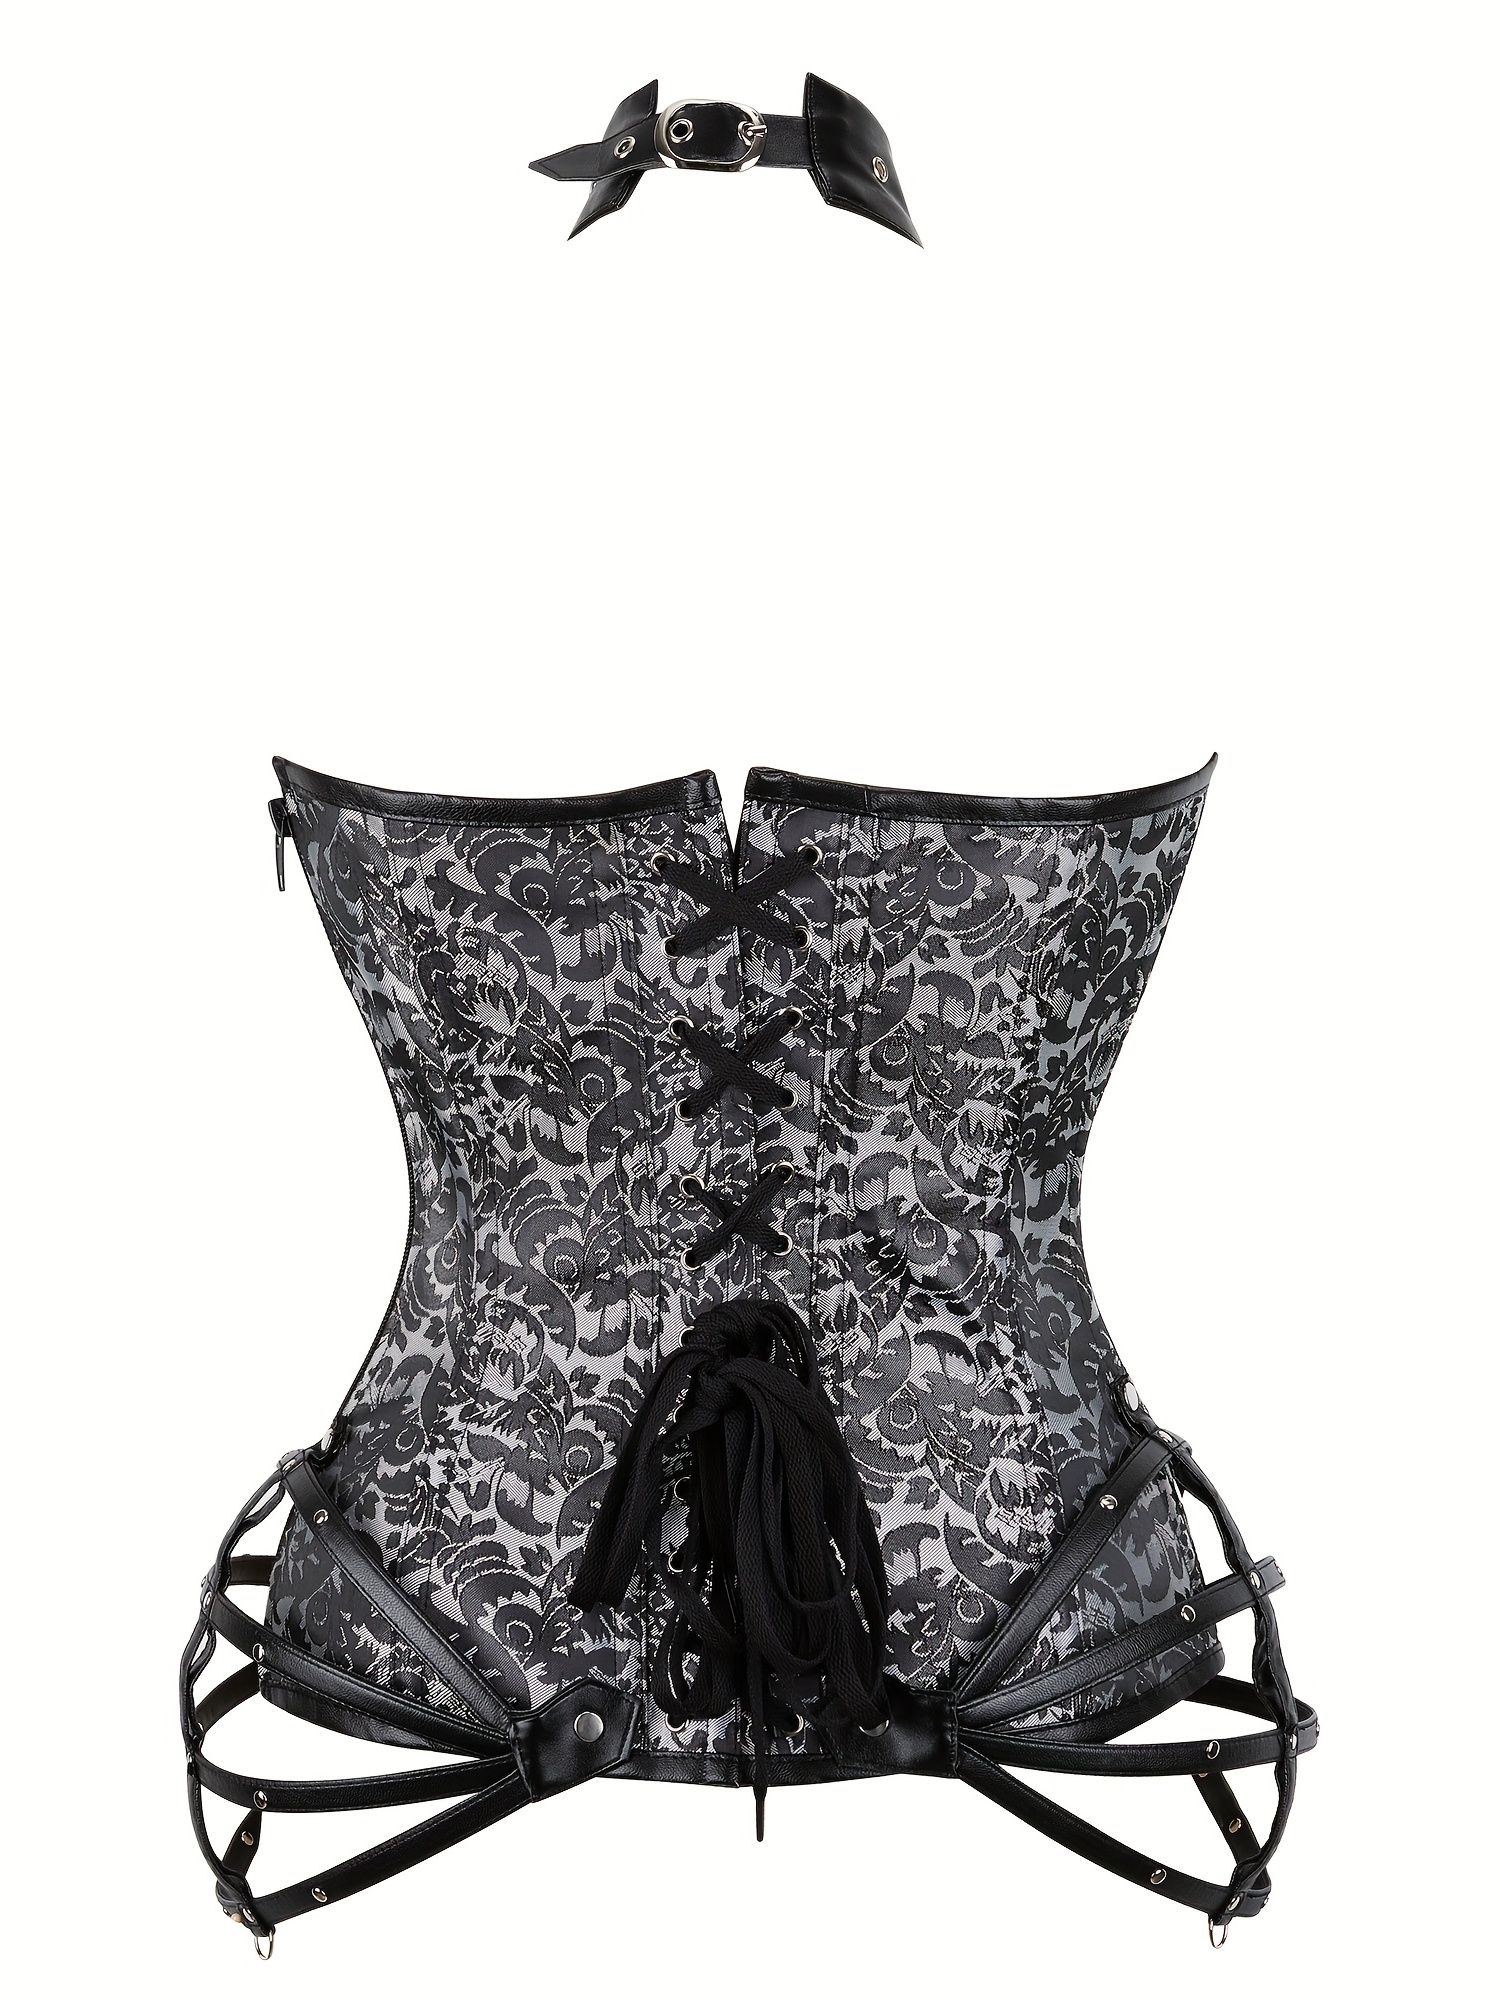 Gothic Halter Strapless Corset Bustier, Tummy Control Jacquard Zipper Body  Shaper, Women's Lingerie & Shapewear